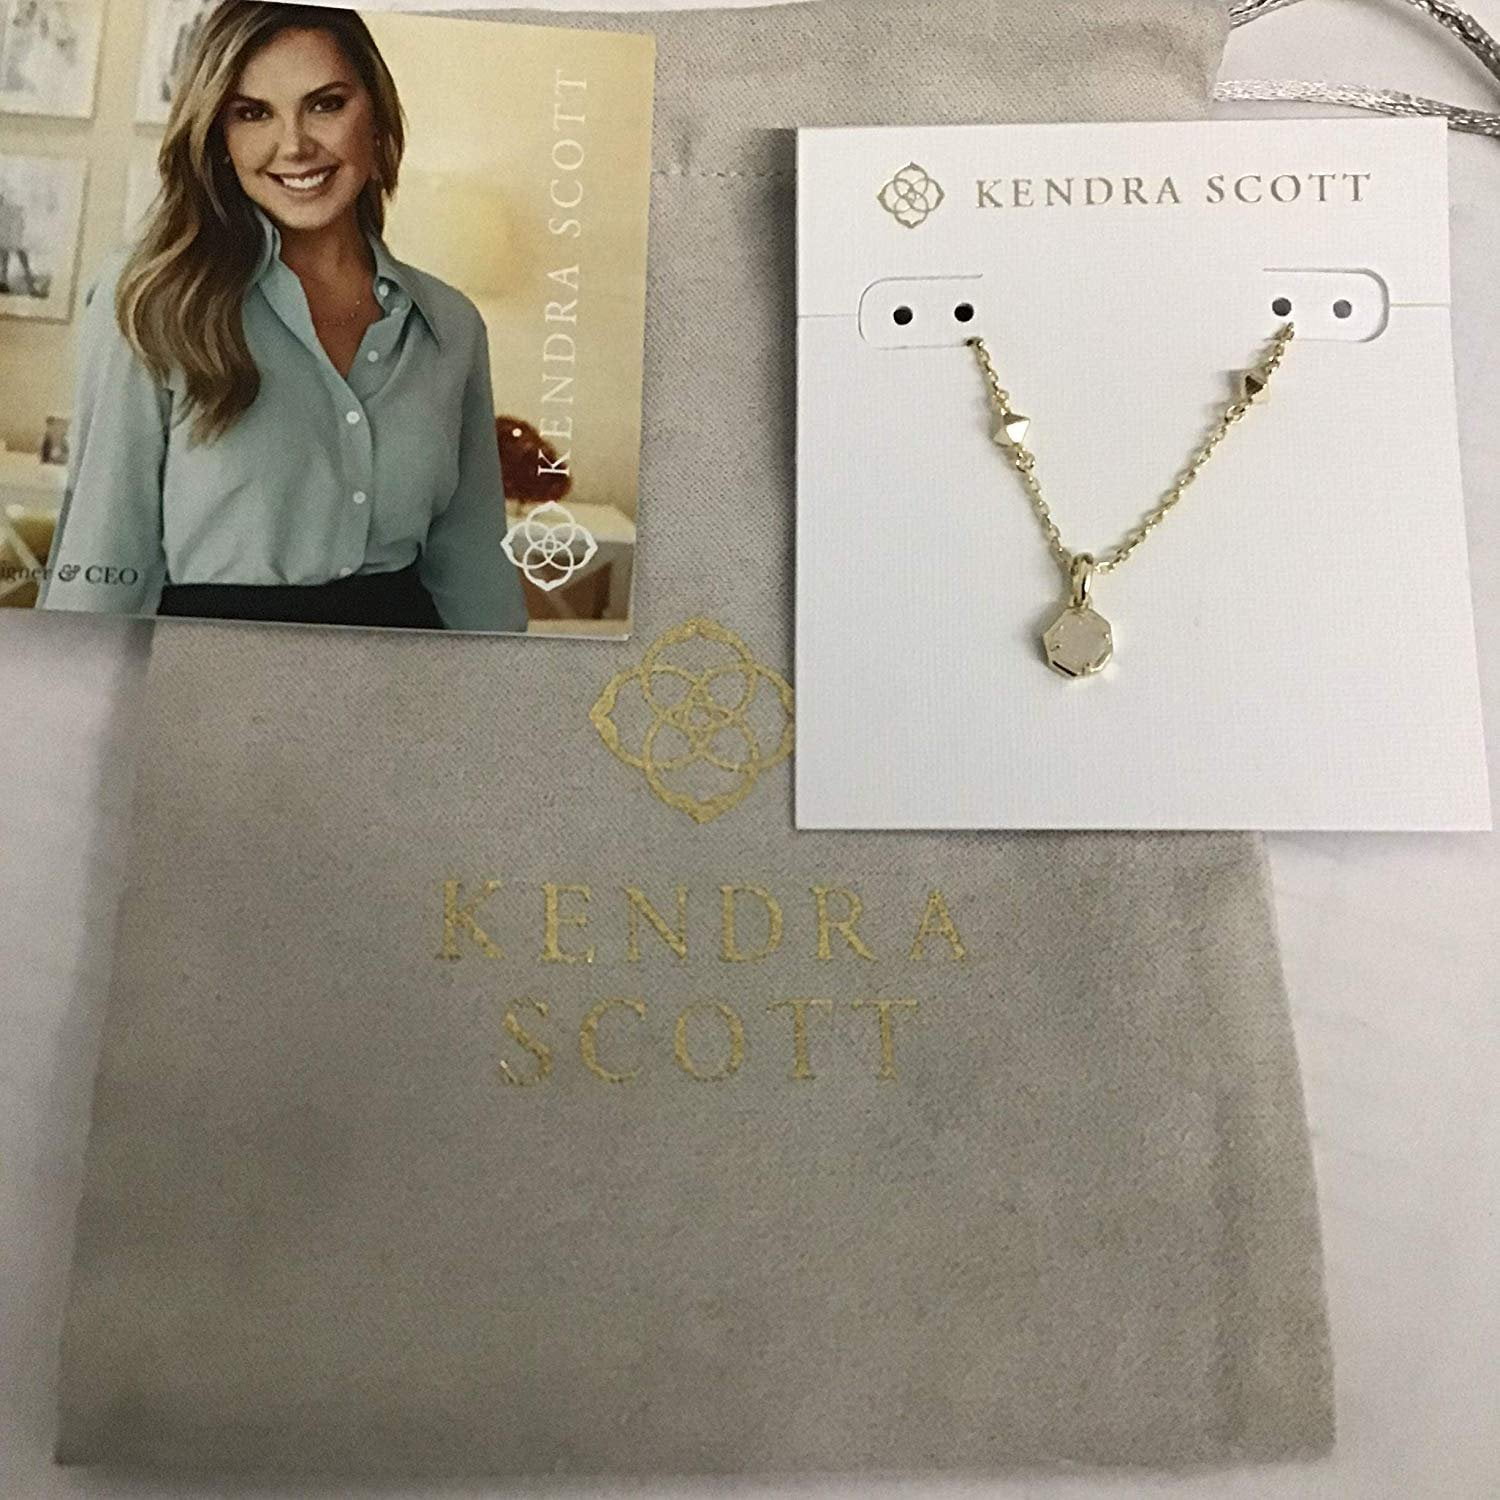 Kendra Scott Nola Silver Pendant Necklace in Platinum Drusy - ShopStyle